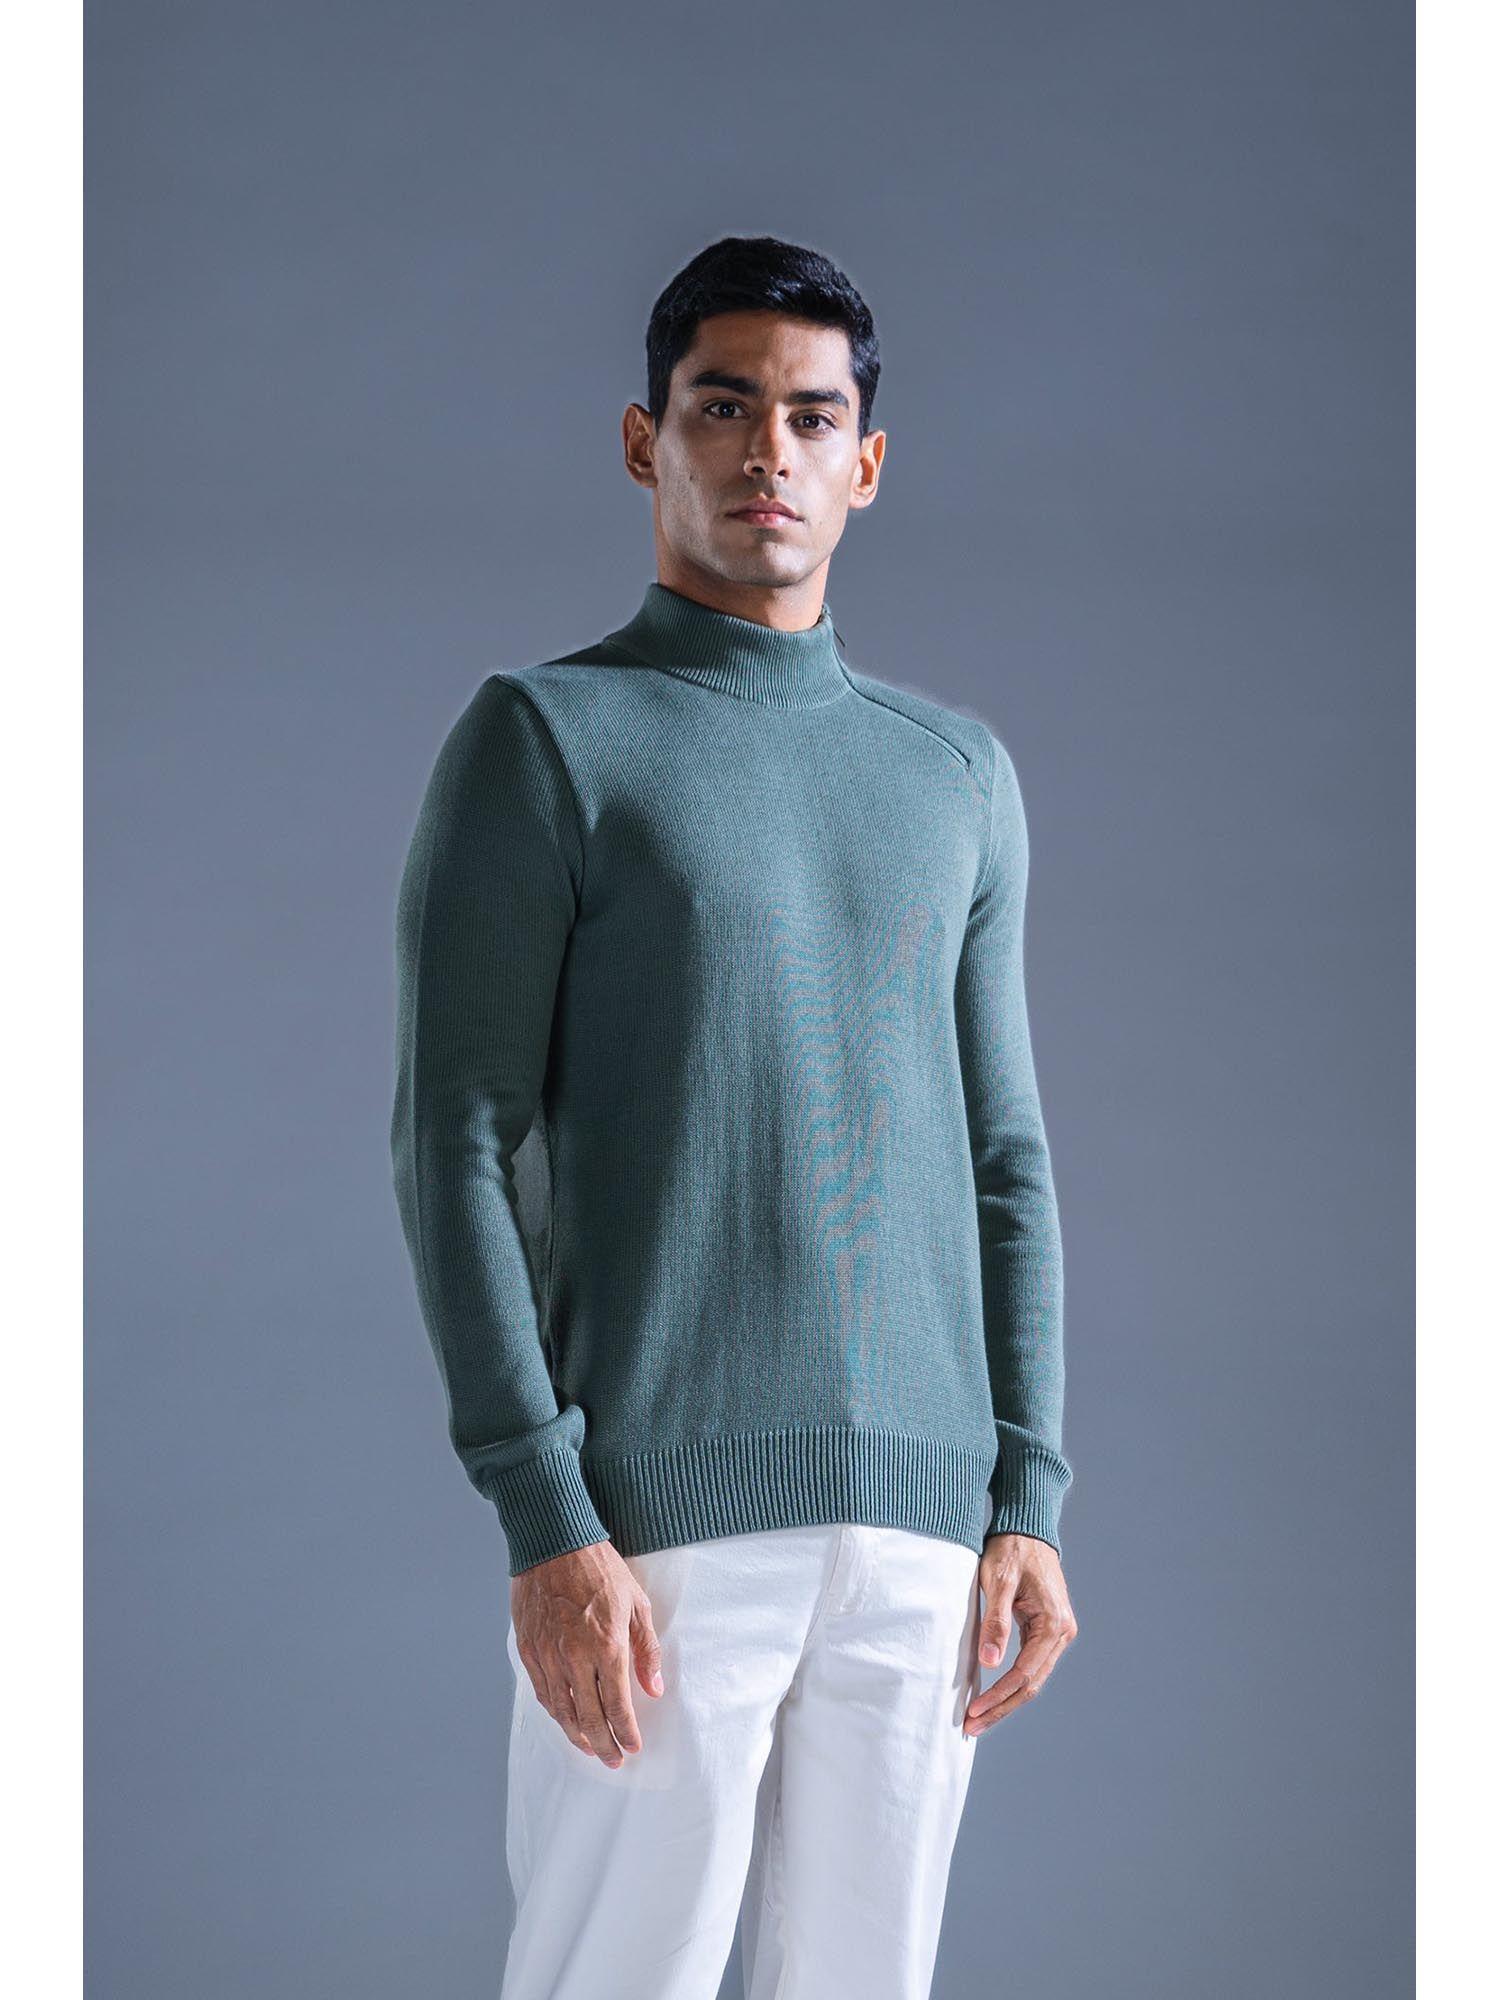 sage-green-cotton-knit-sweater